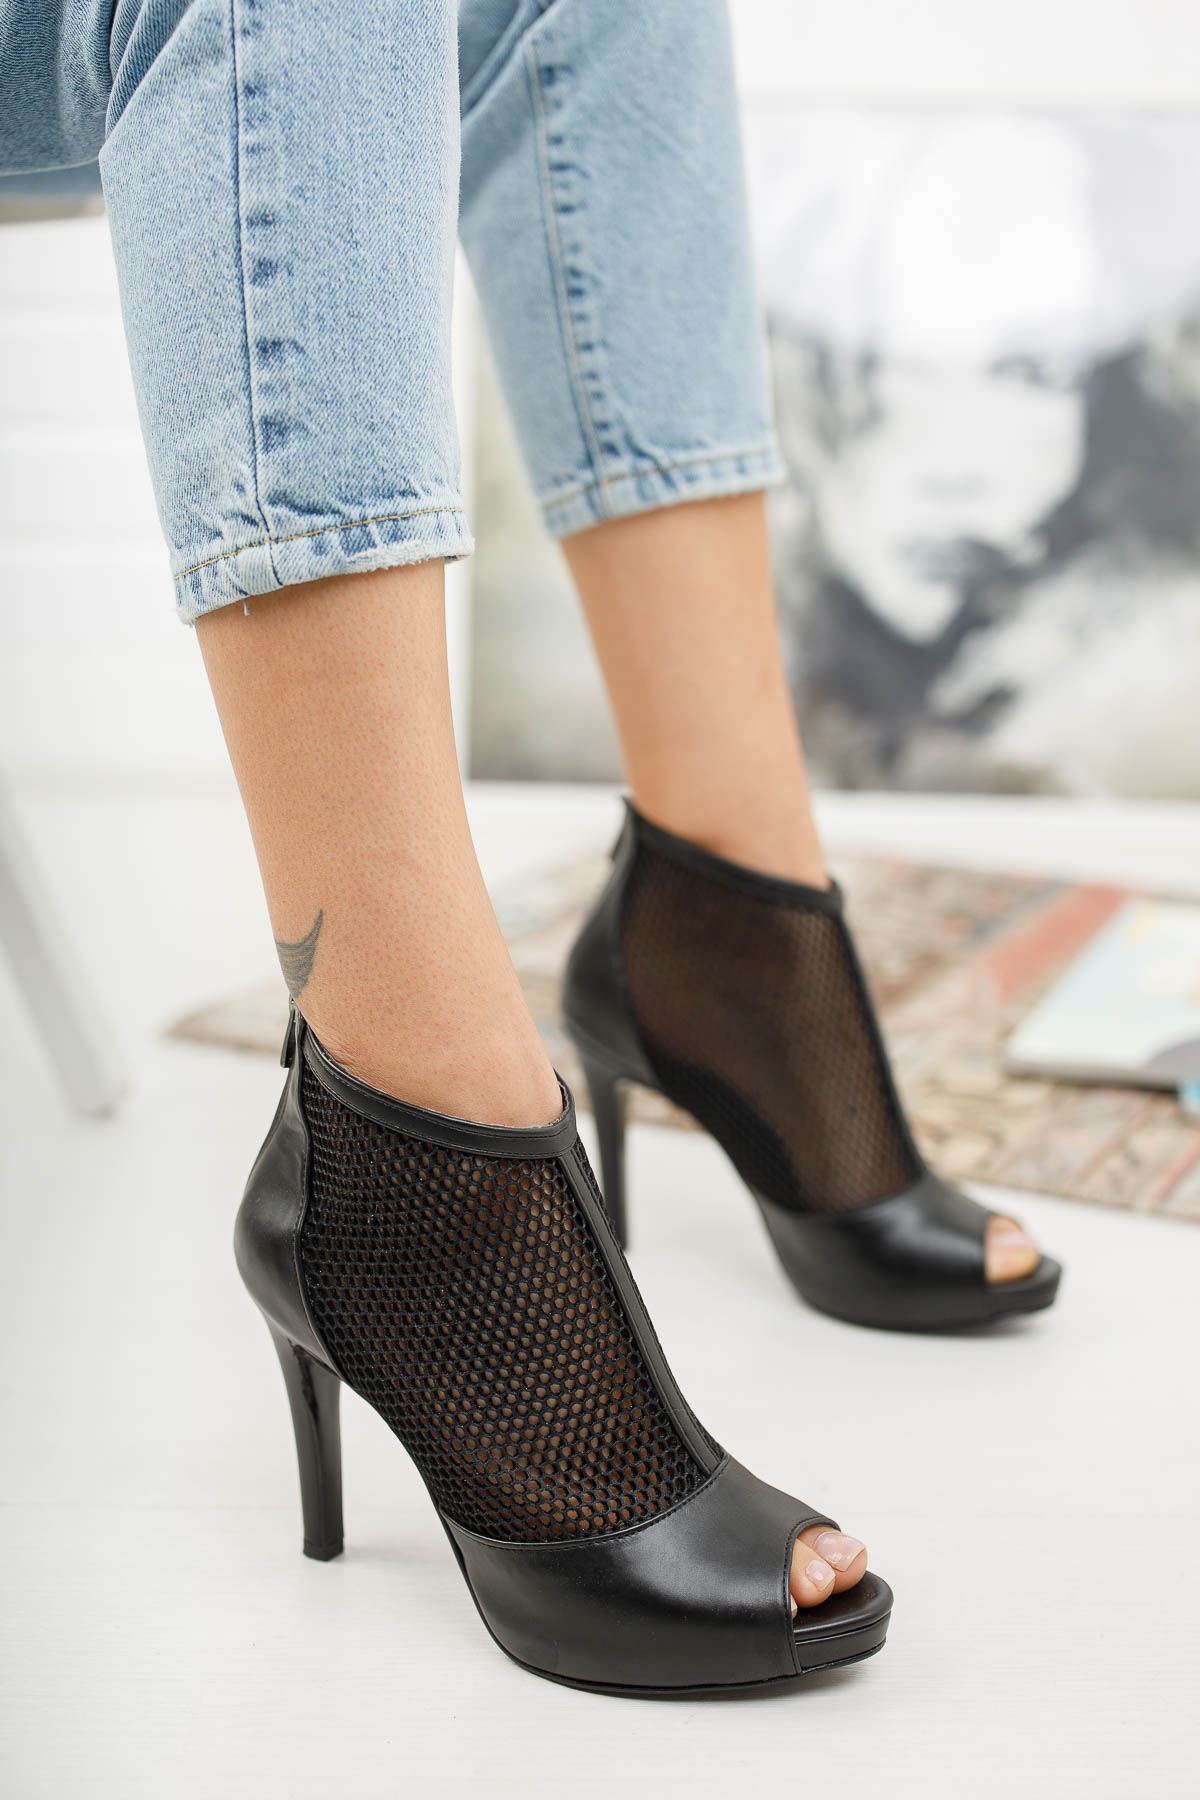 Coleen Siyah Cilt Topuklu Kadın Ayakkabı